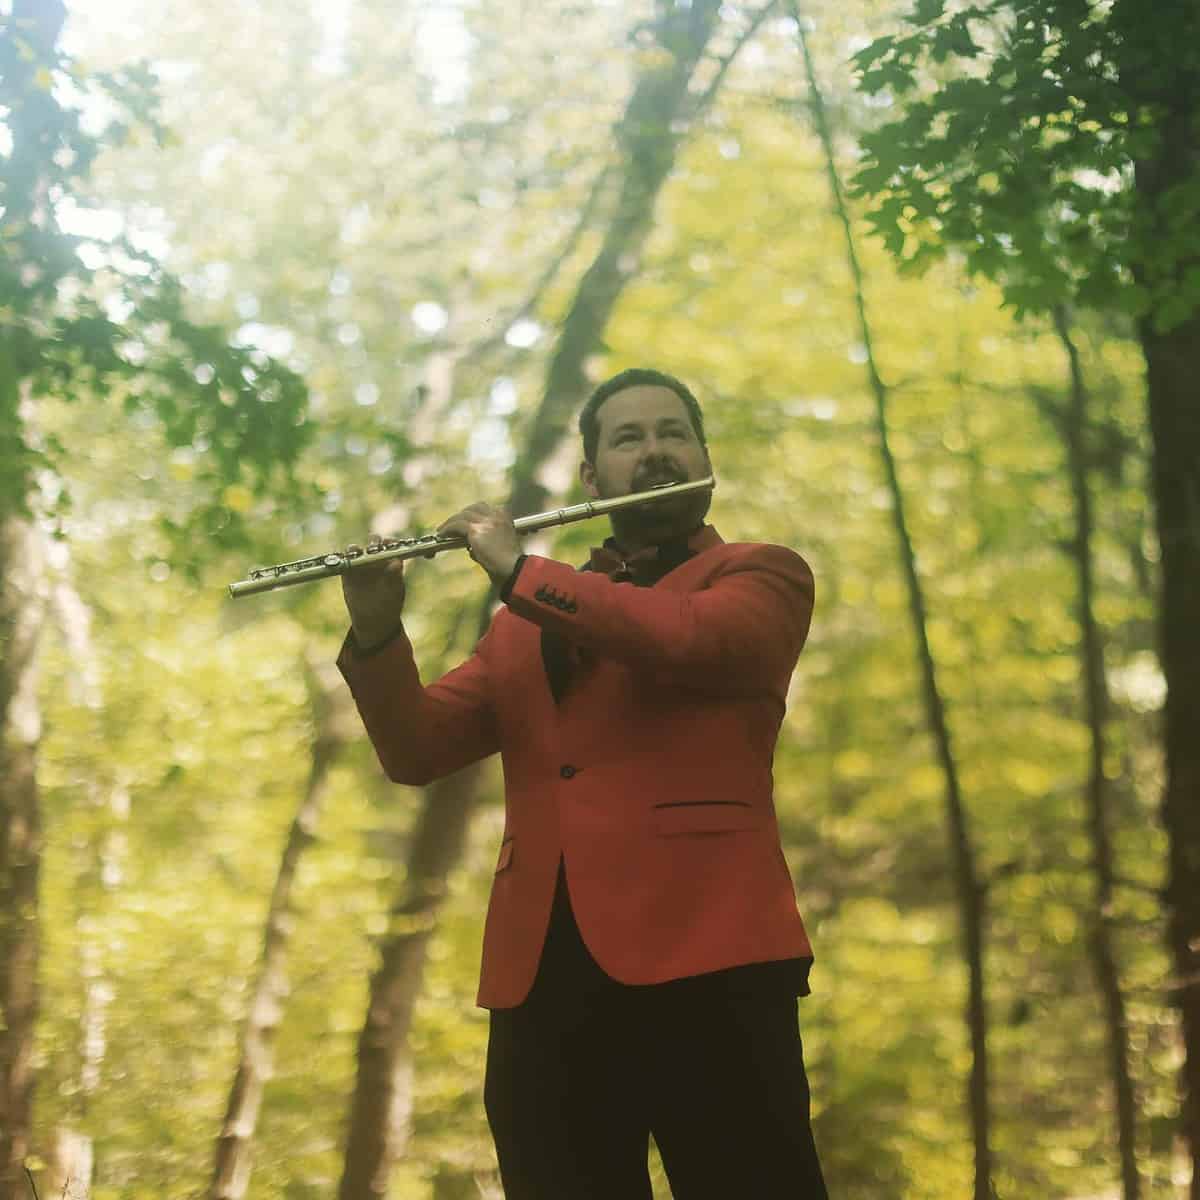 Carlos Jimenez plays the flute in a woodland setting.